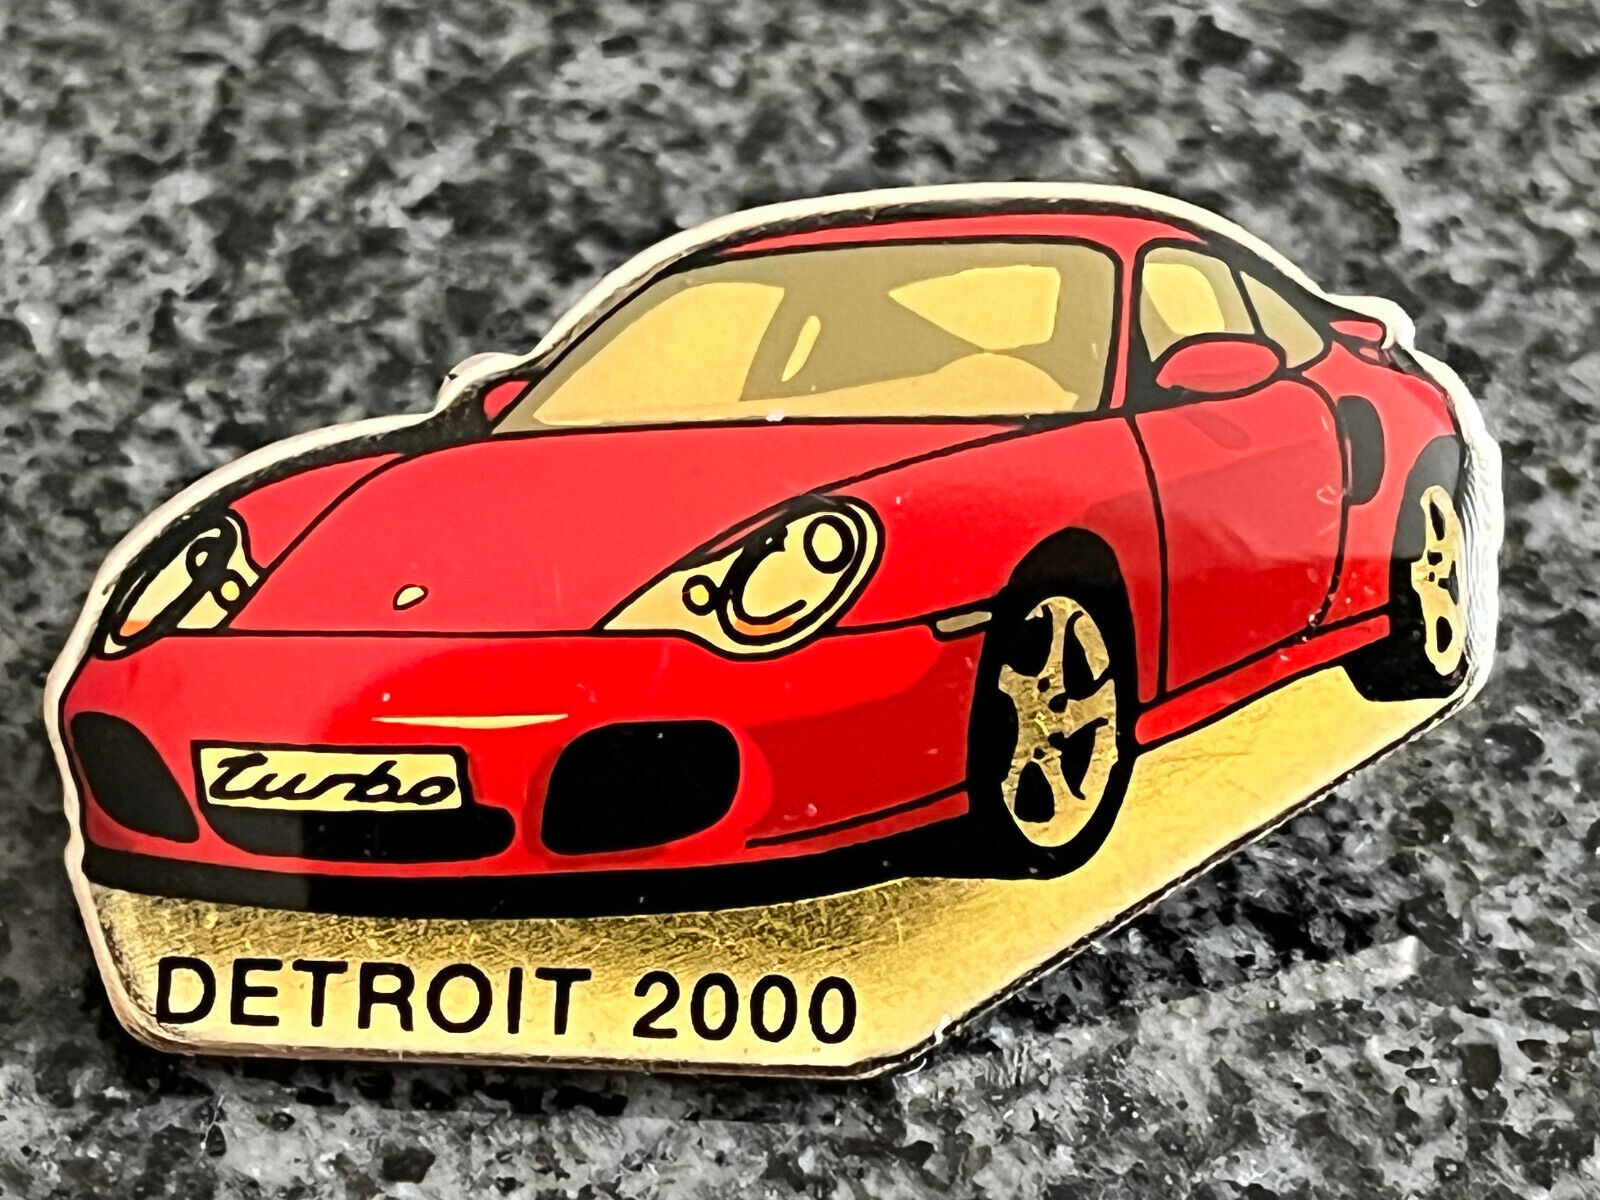 PORSCHE DETROIT AUTOSHOW PRESS 911 996 TURBO COUPE IN RED LAPEL PIN 2000 - 2001